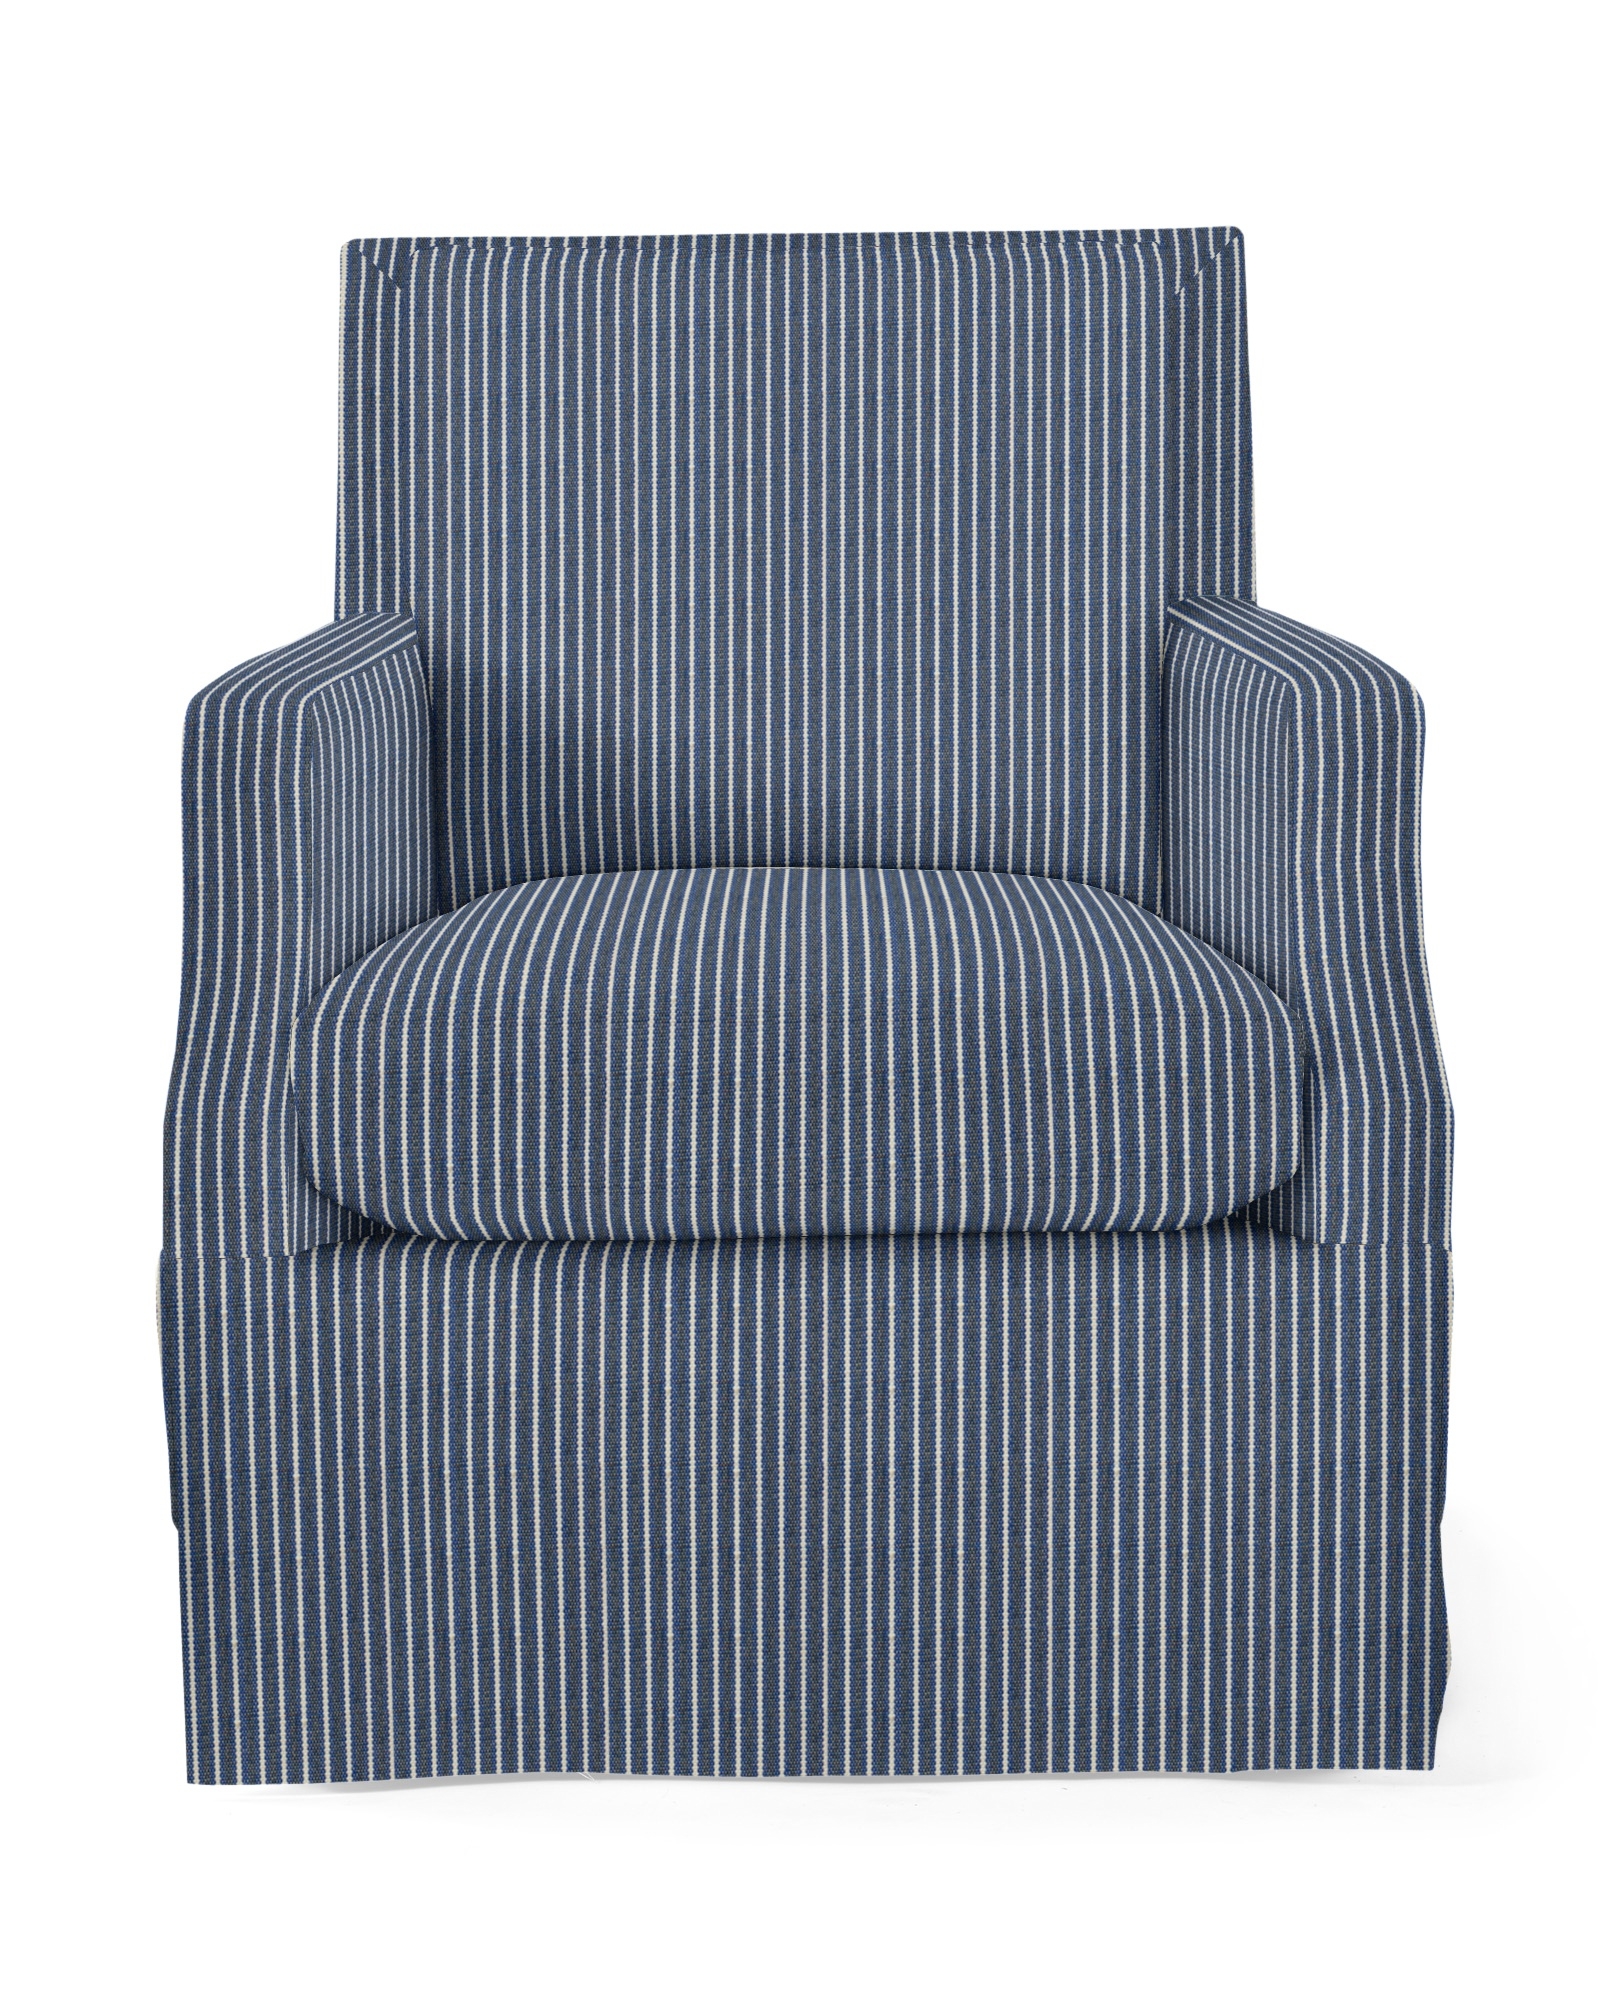 Grady Swivel Chair - Skirted - Image 0